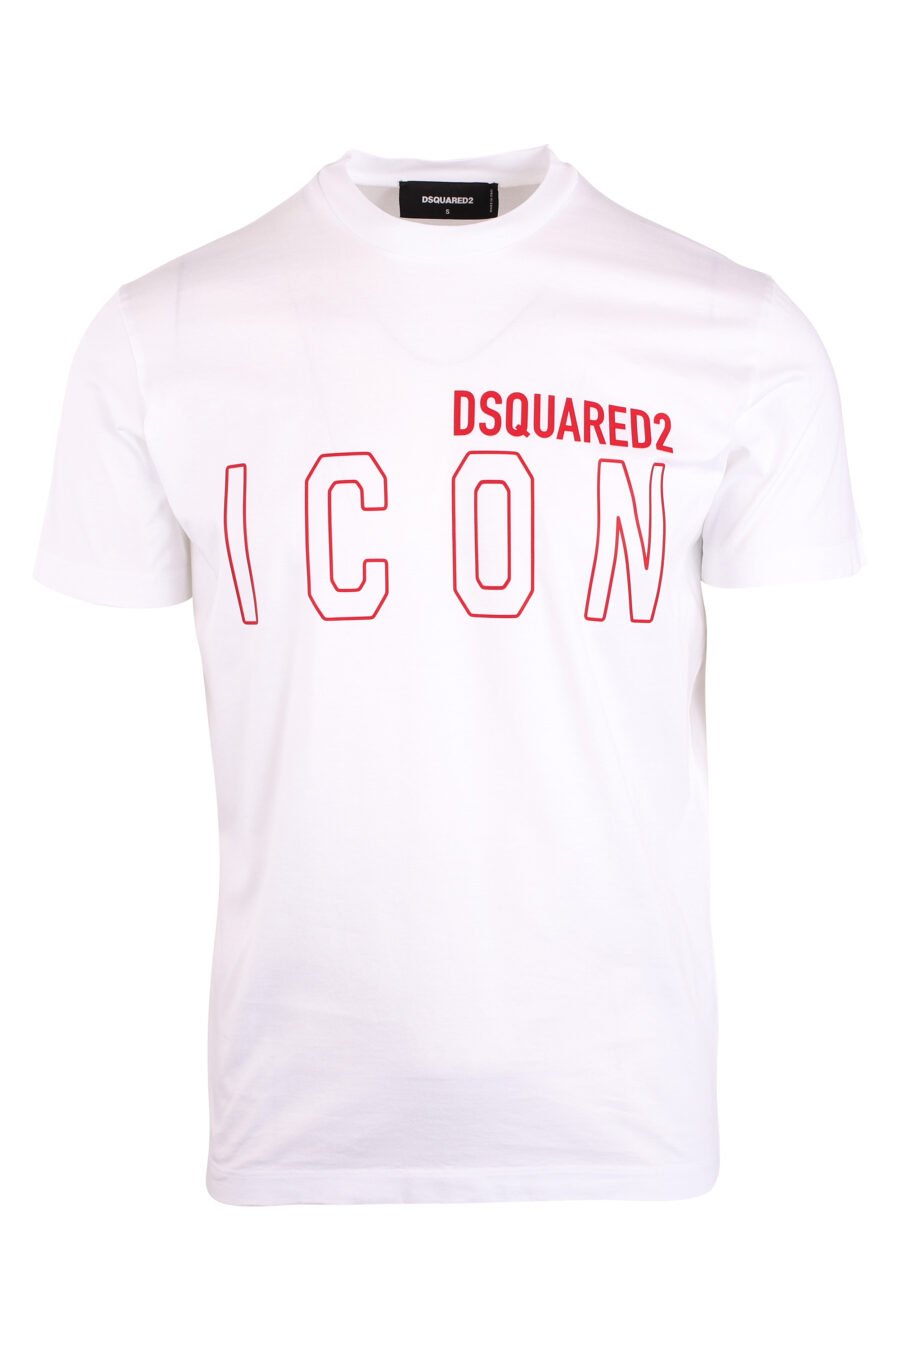 Dsquared2 - Camiseta blanca con doble logo 